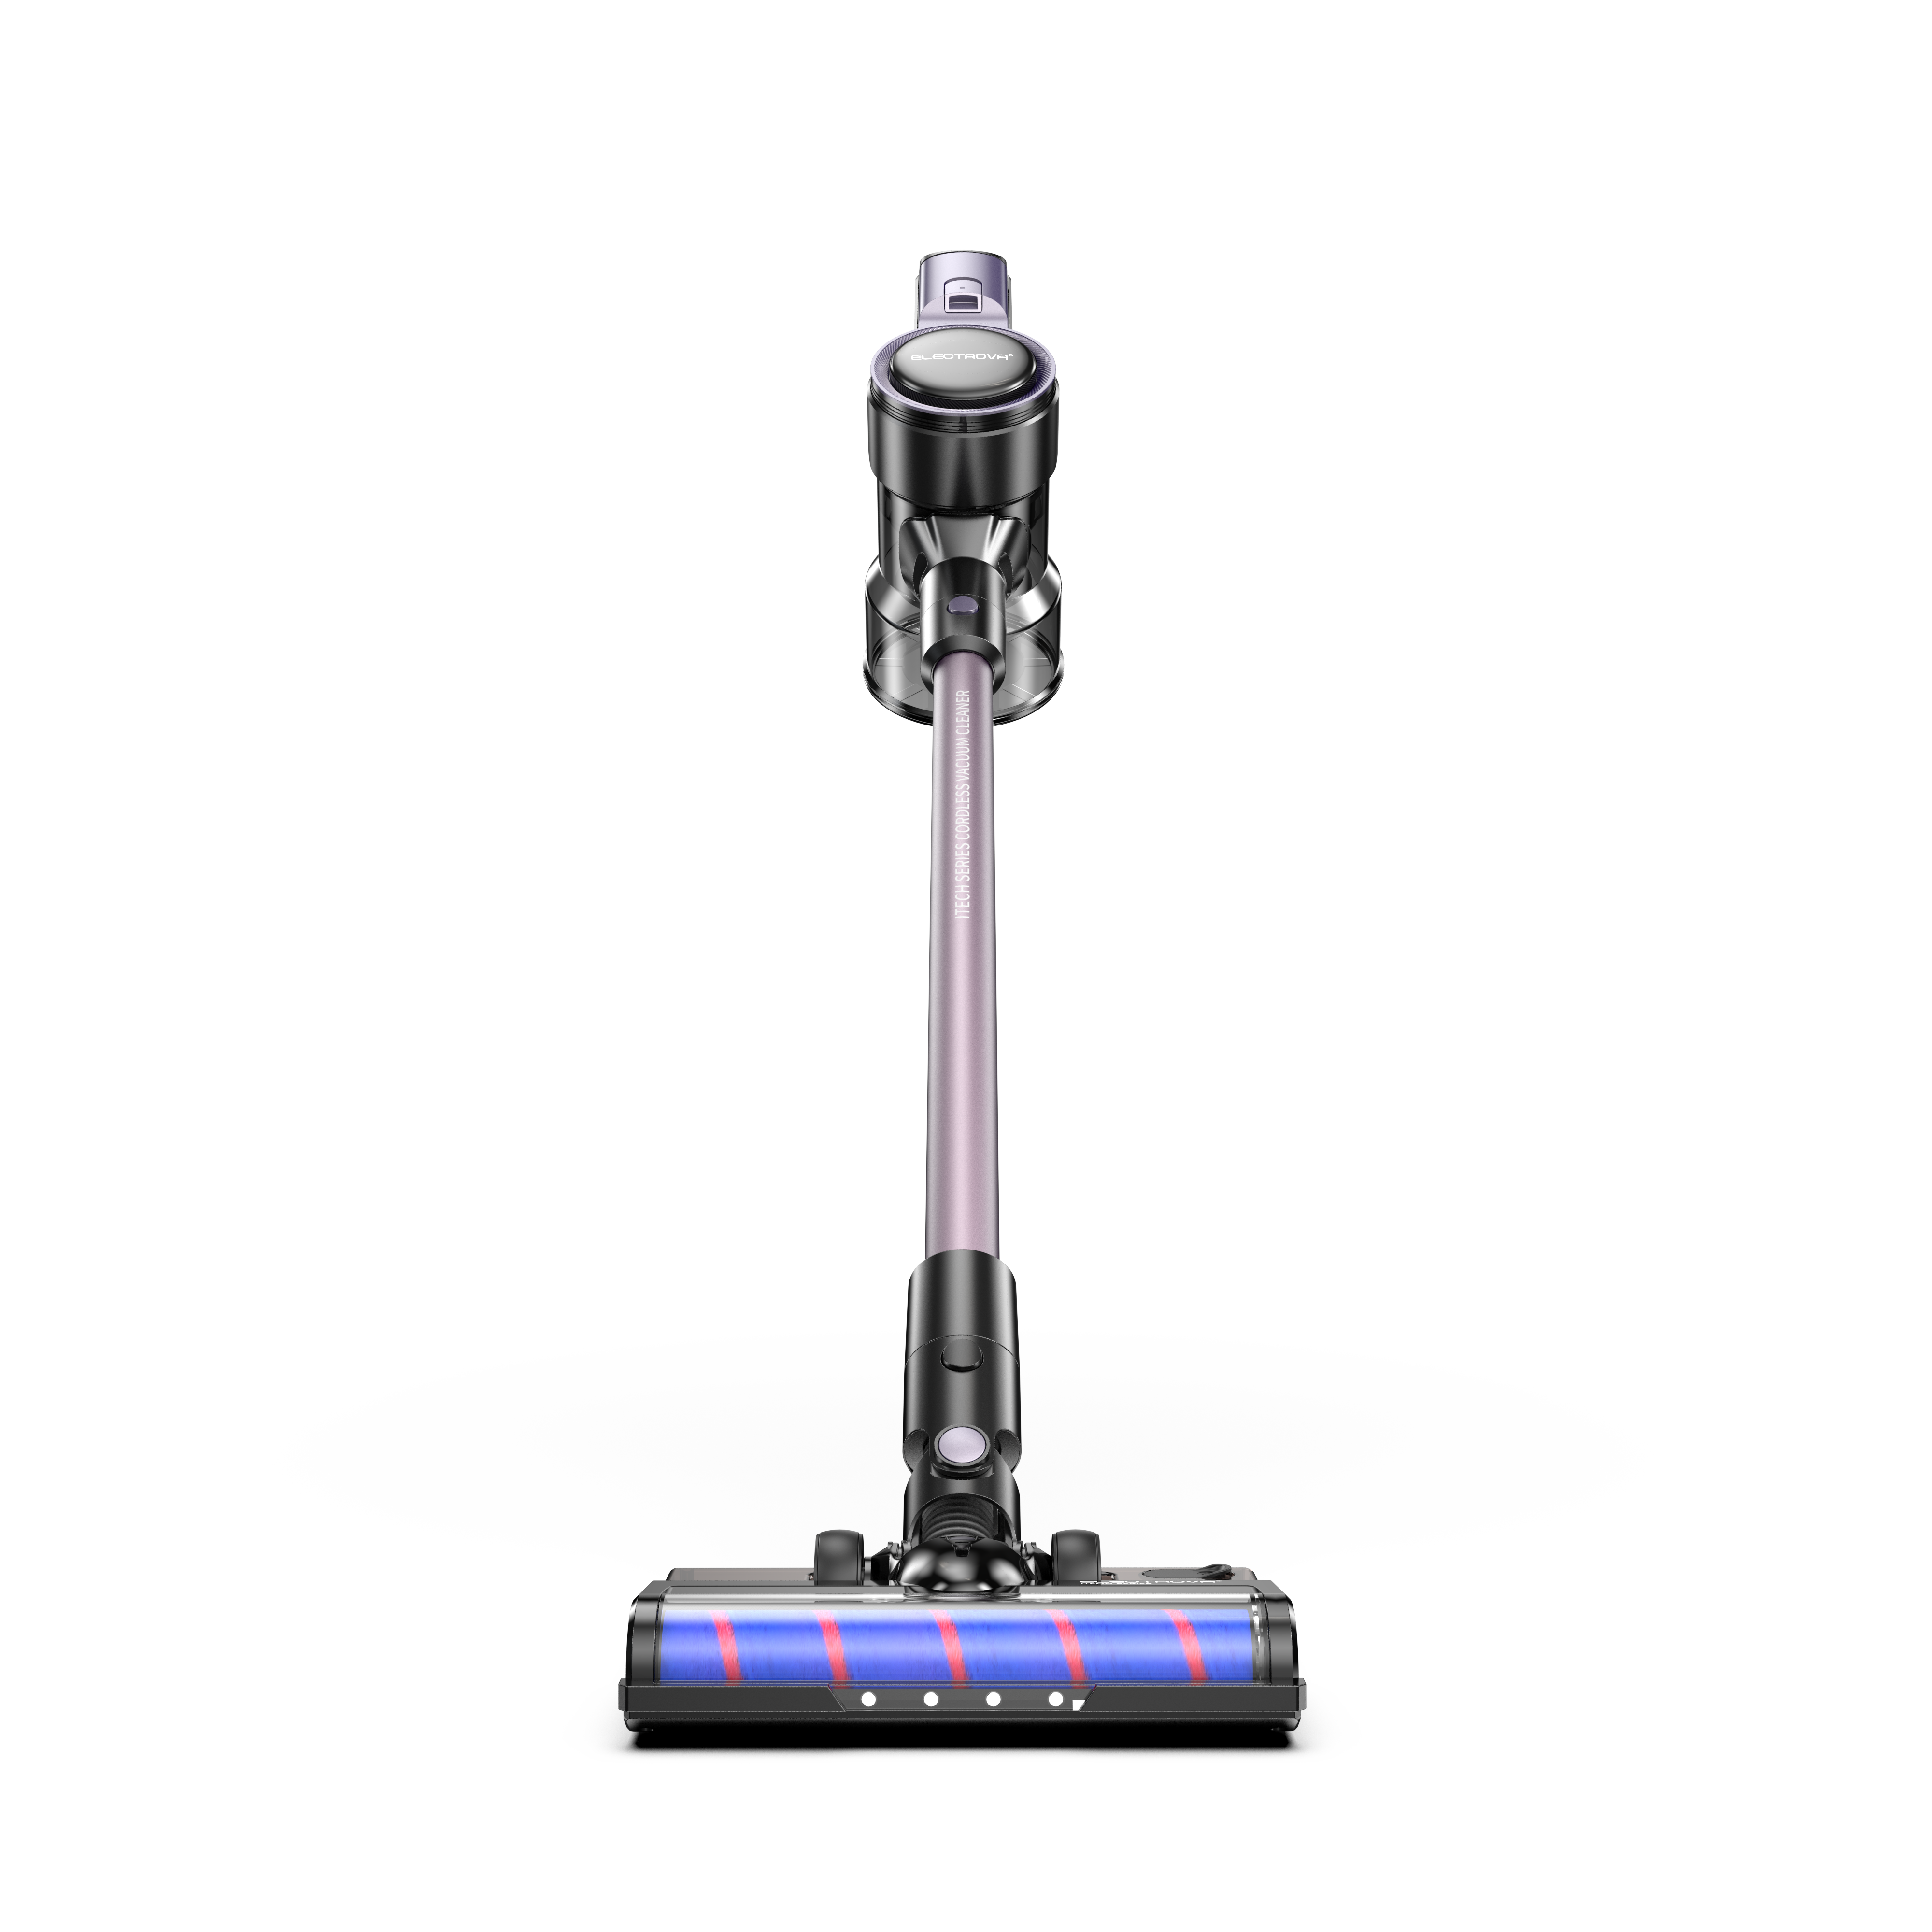 Electrova iTech PRO Smart Cordless Vacuum Cleaner